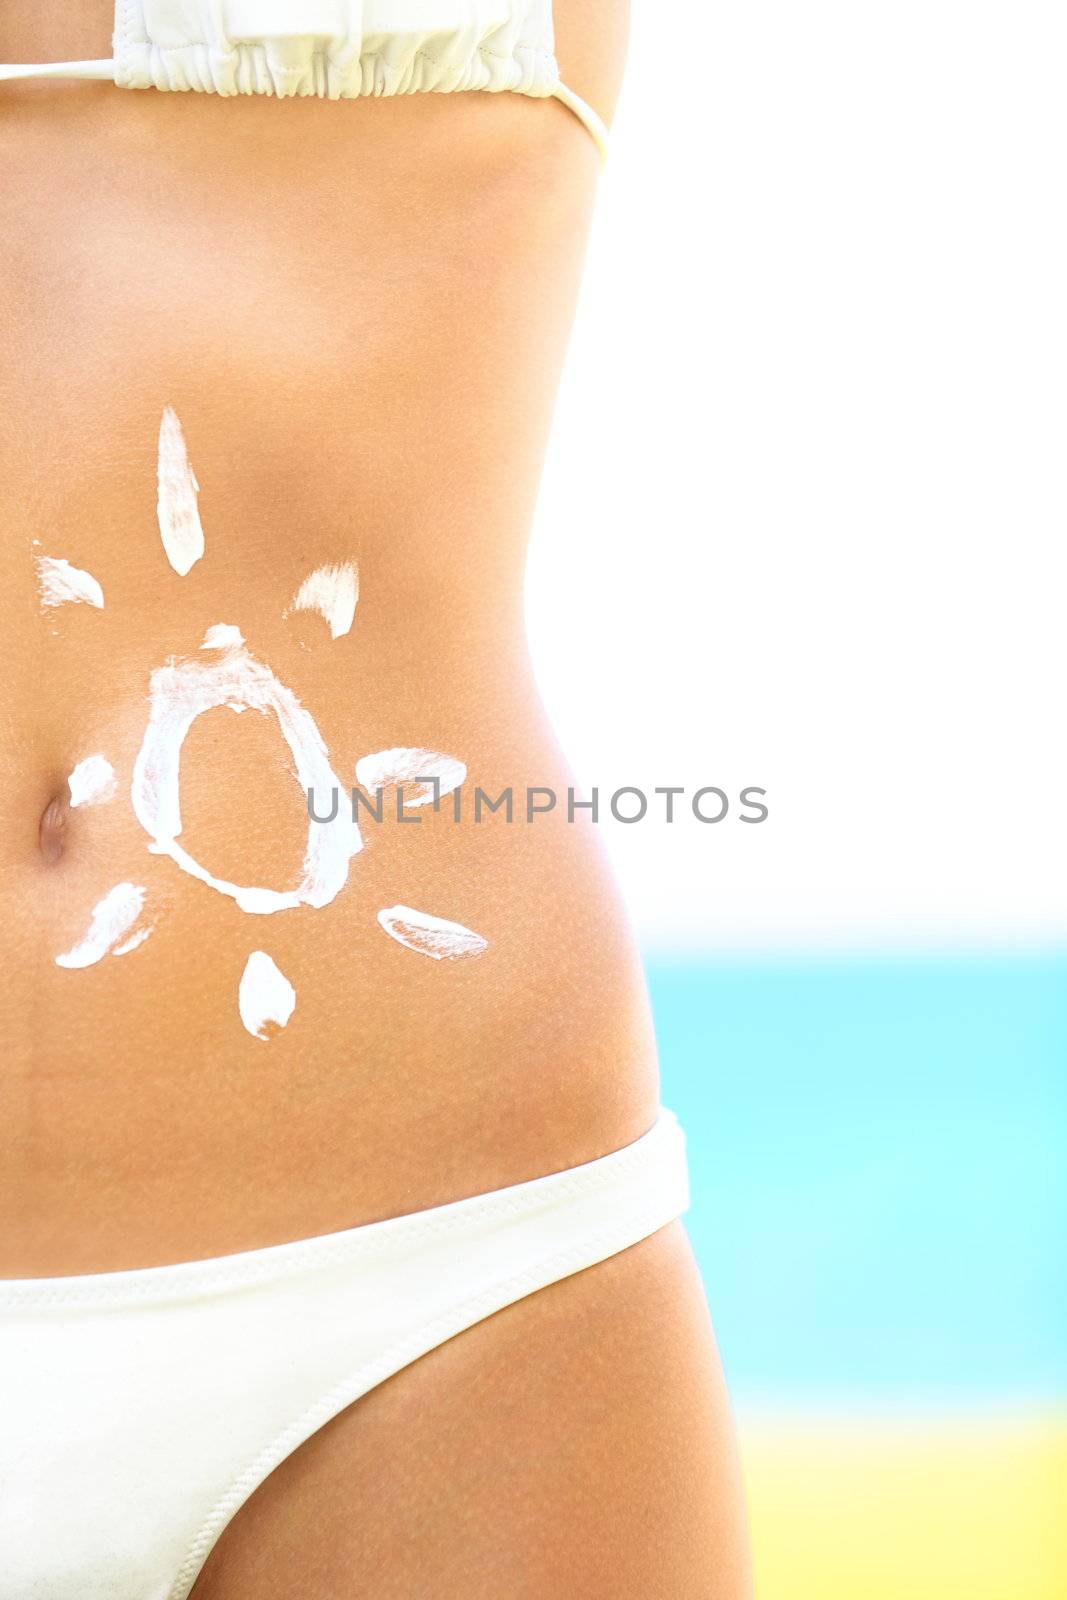 Sunscreen / sunblock woman by Maridav